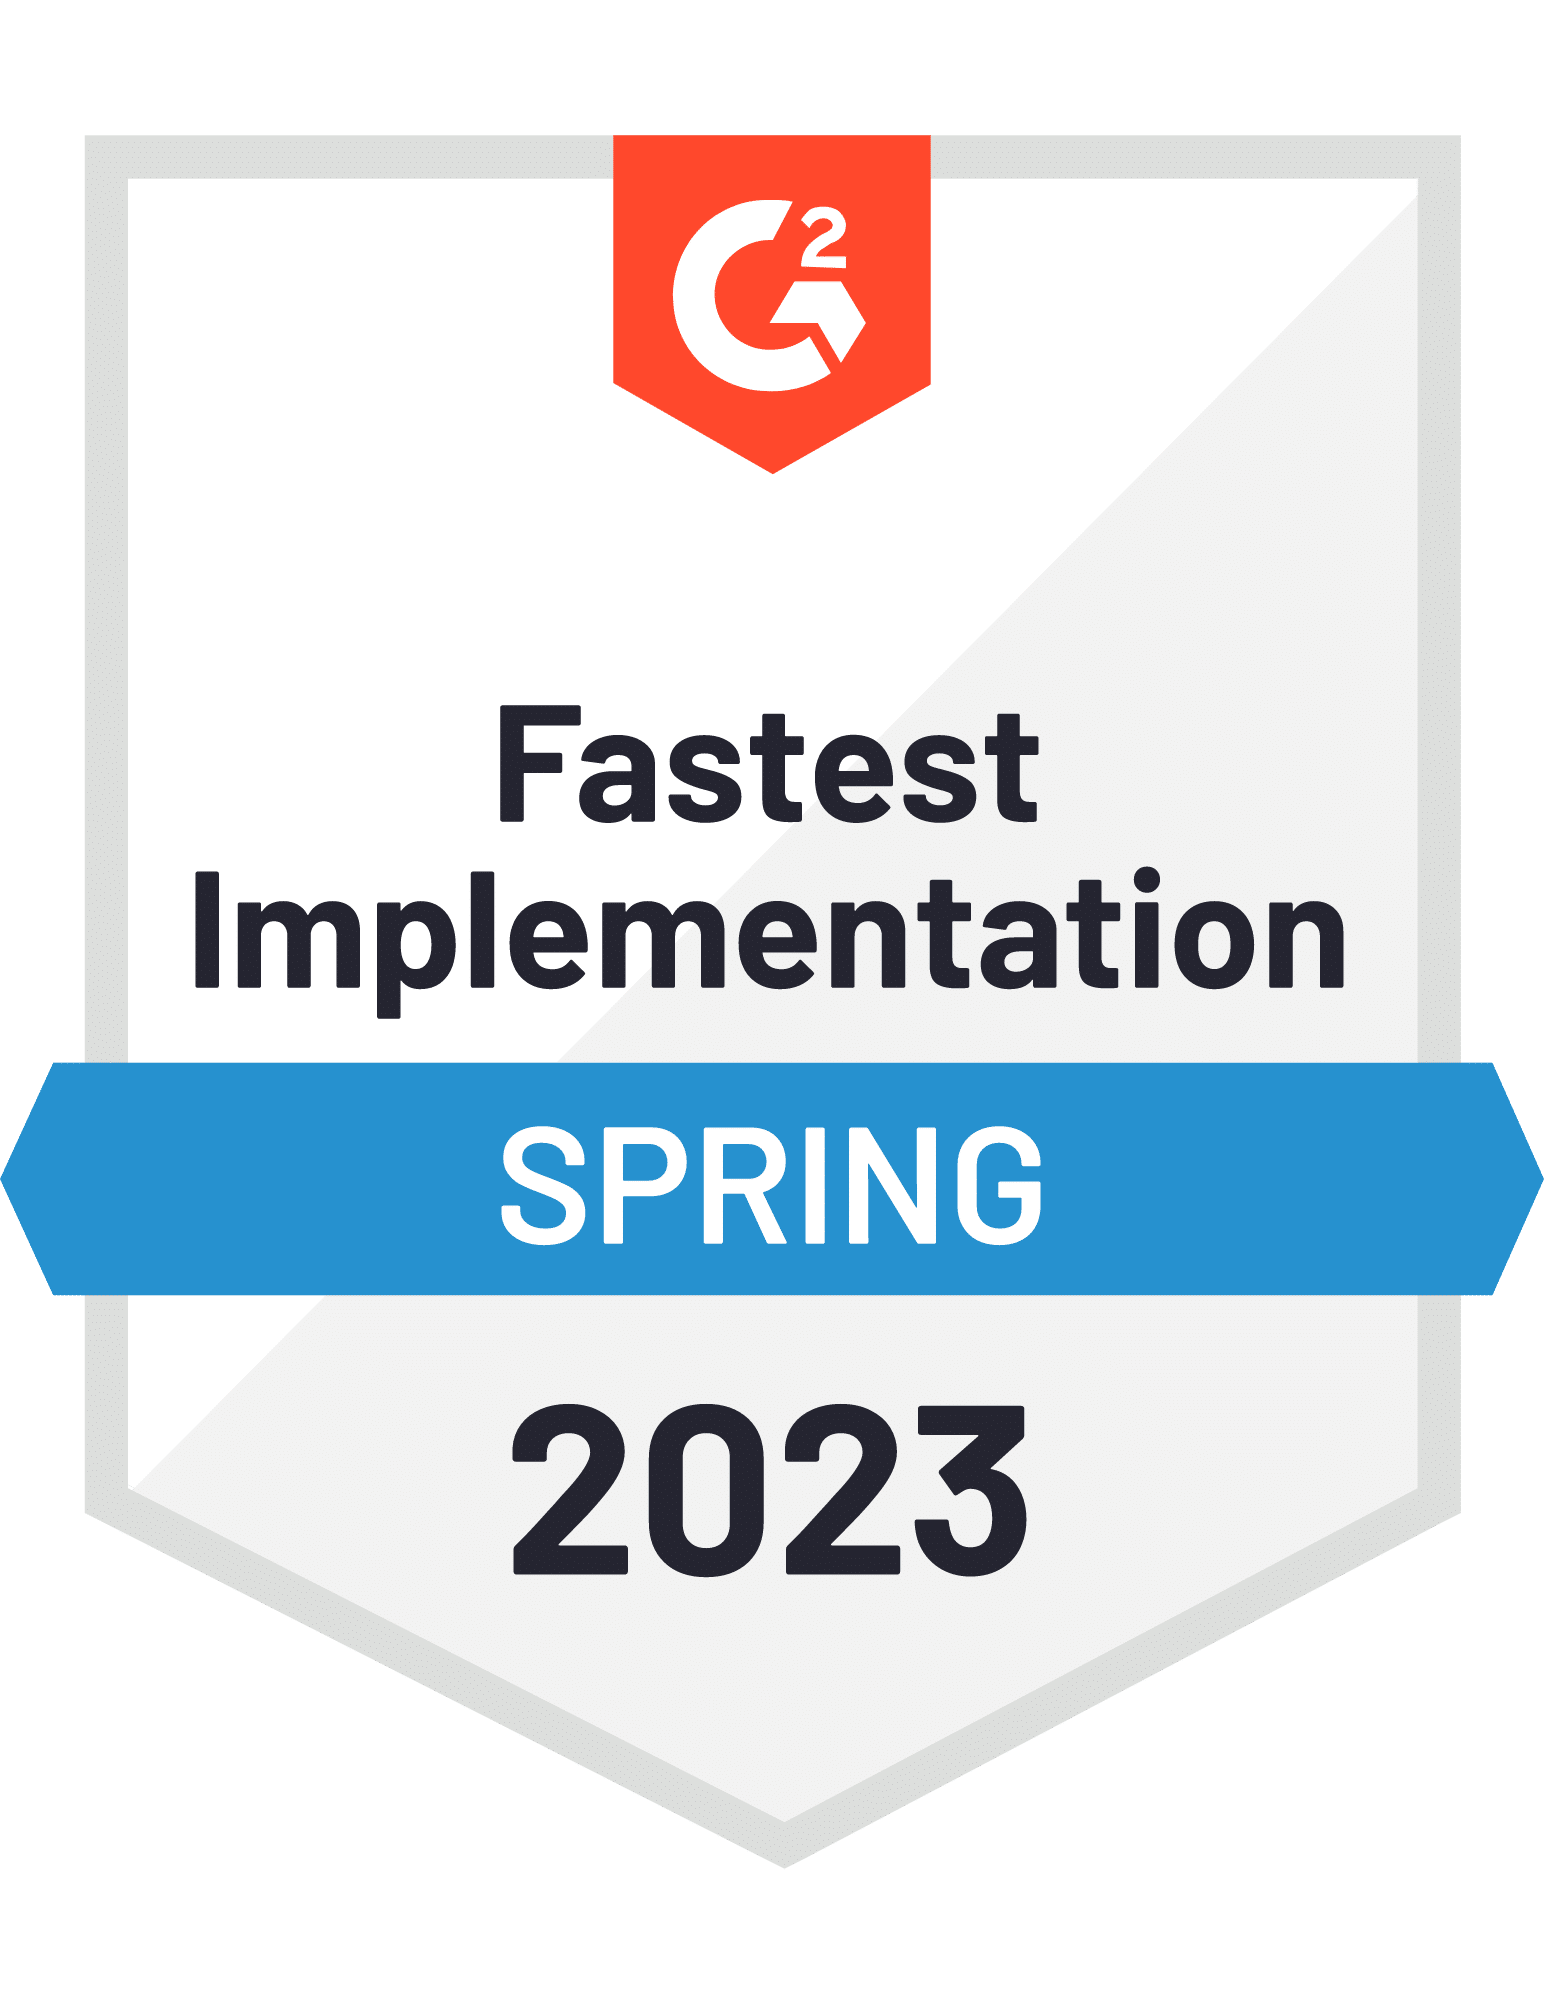 Fastest Implementation Spring 2023 G2 Award